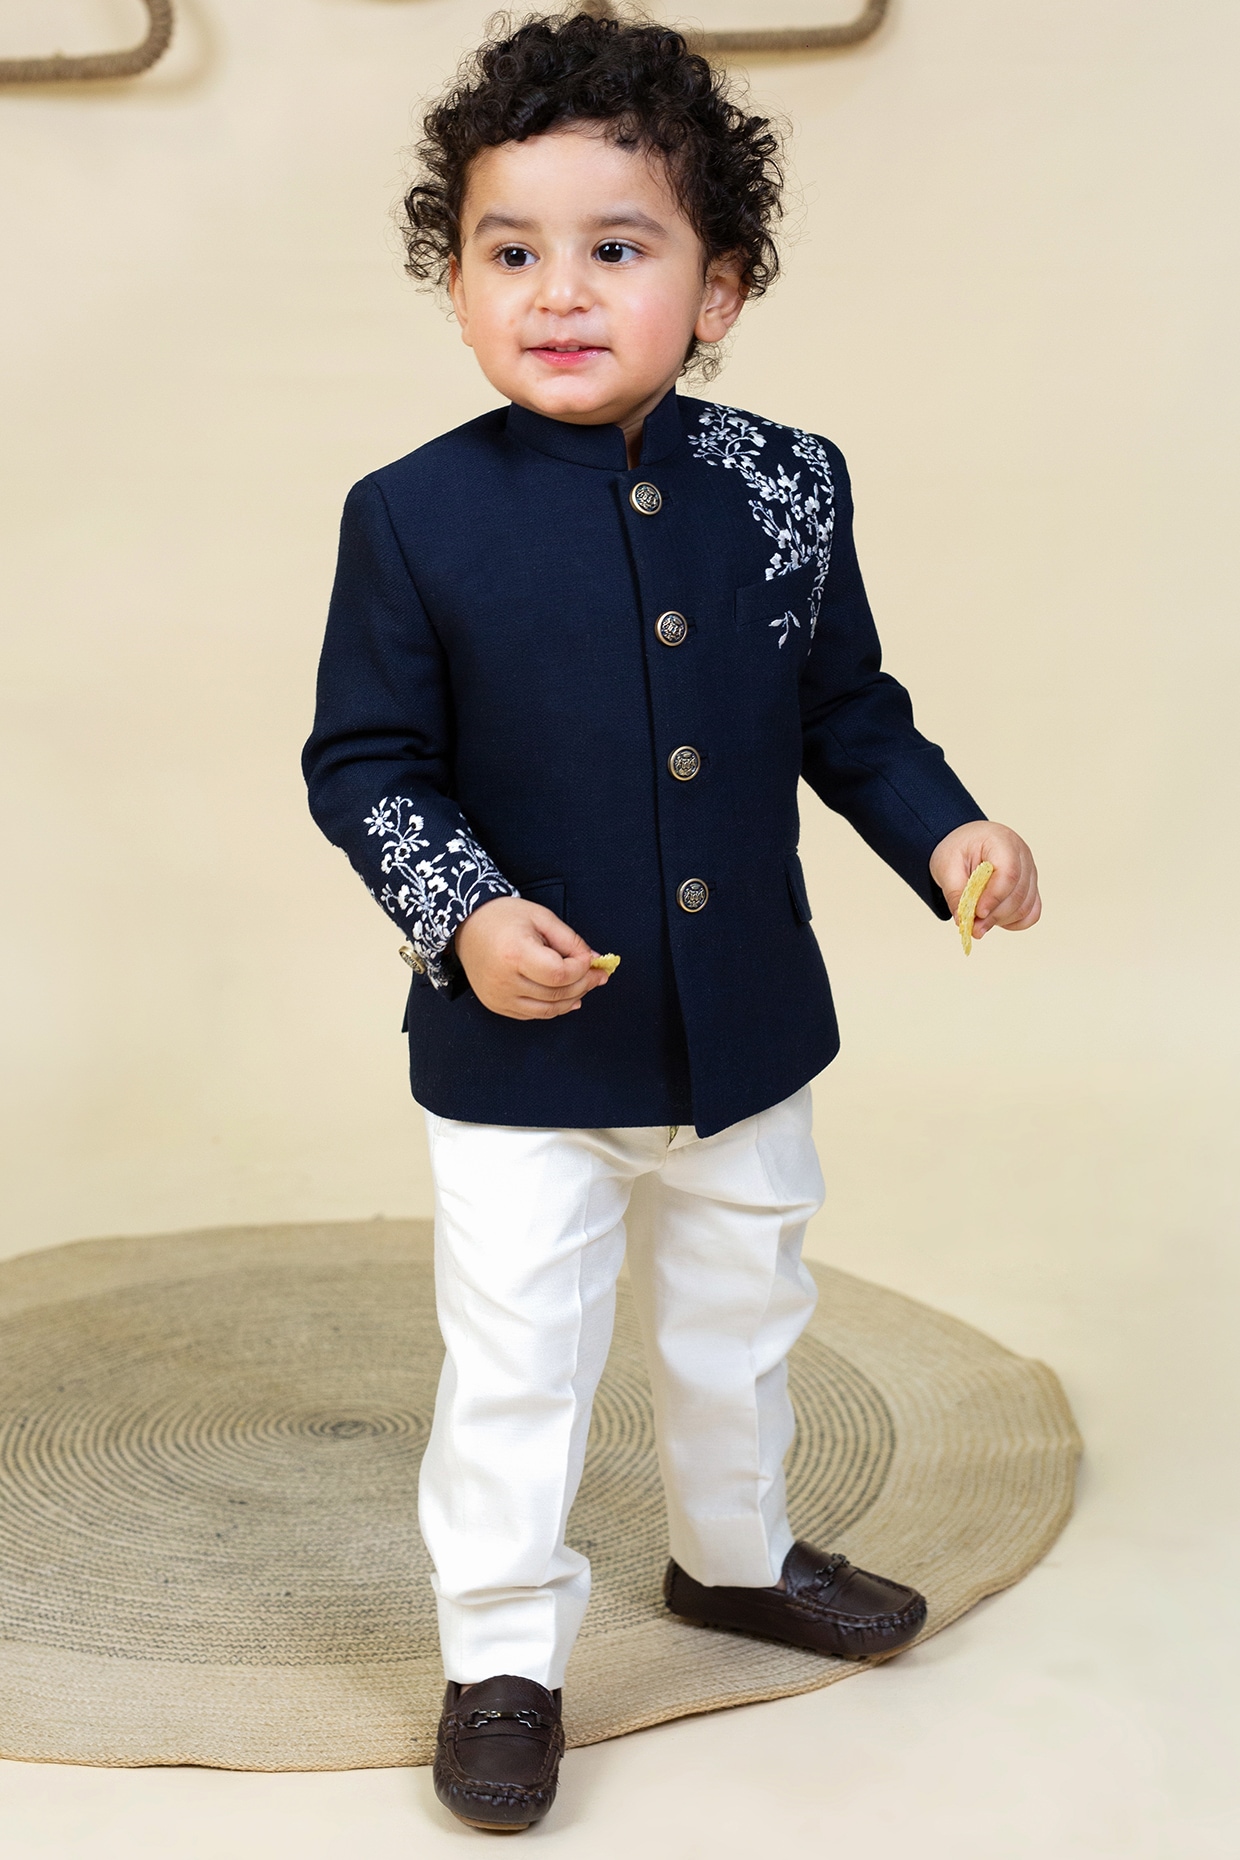 Royal Blue Bandhgala Jodhpuri Suit to... - Bodylinestore.com | Facebook